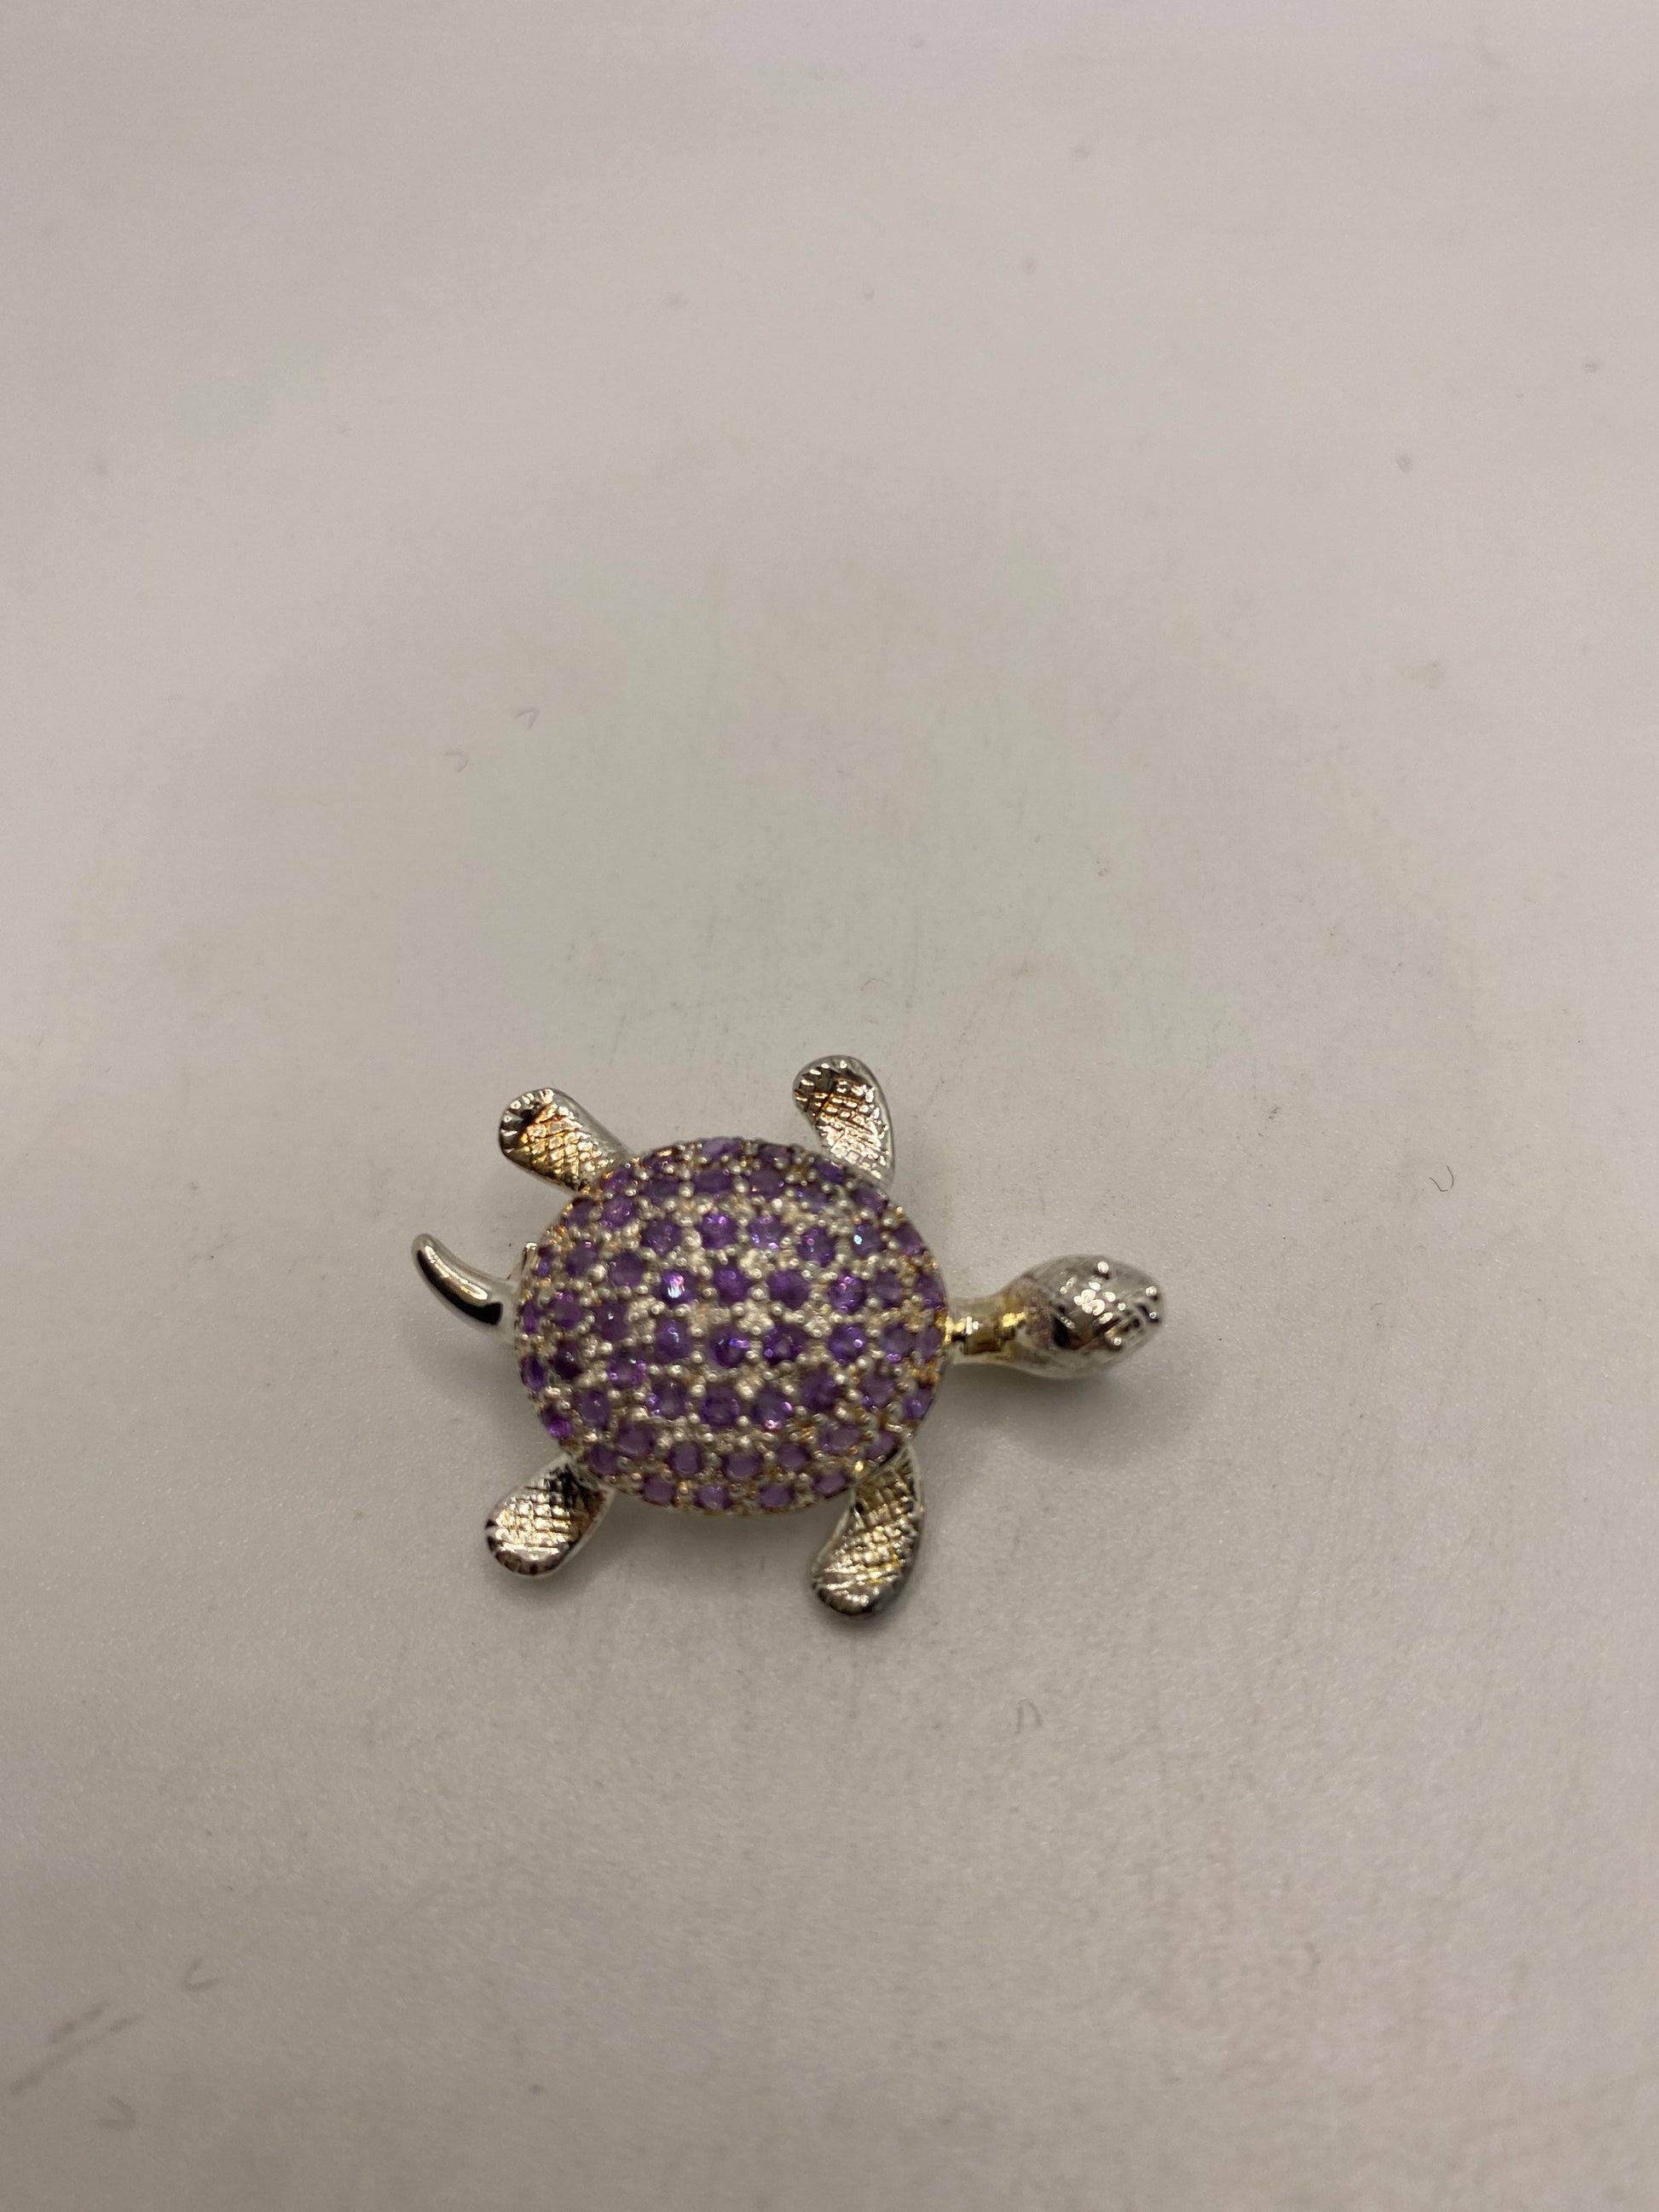 Vintage Purple Amethyst Turtle Pin 925 Sterling Silver Brooch